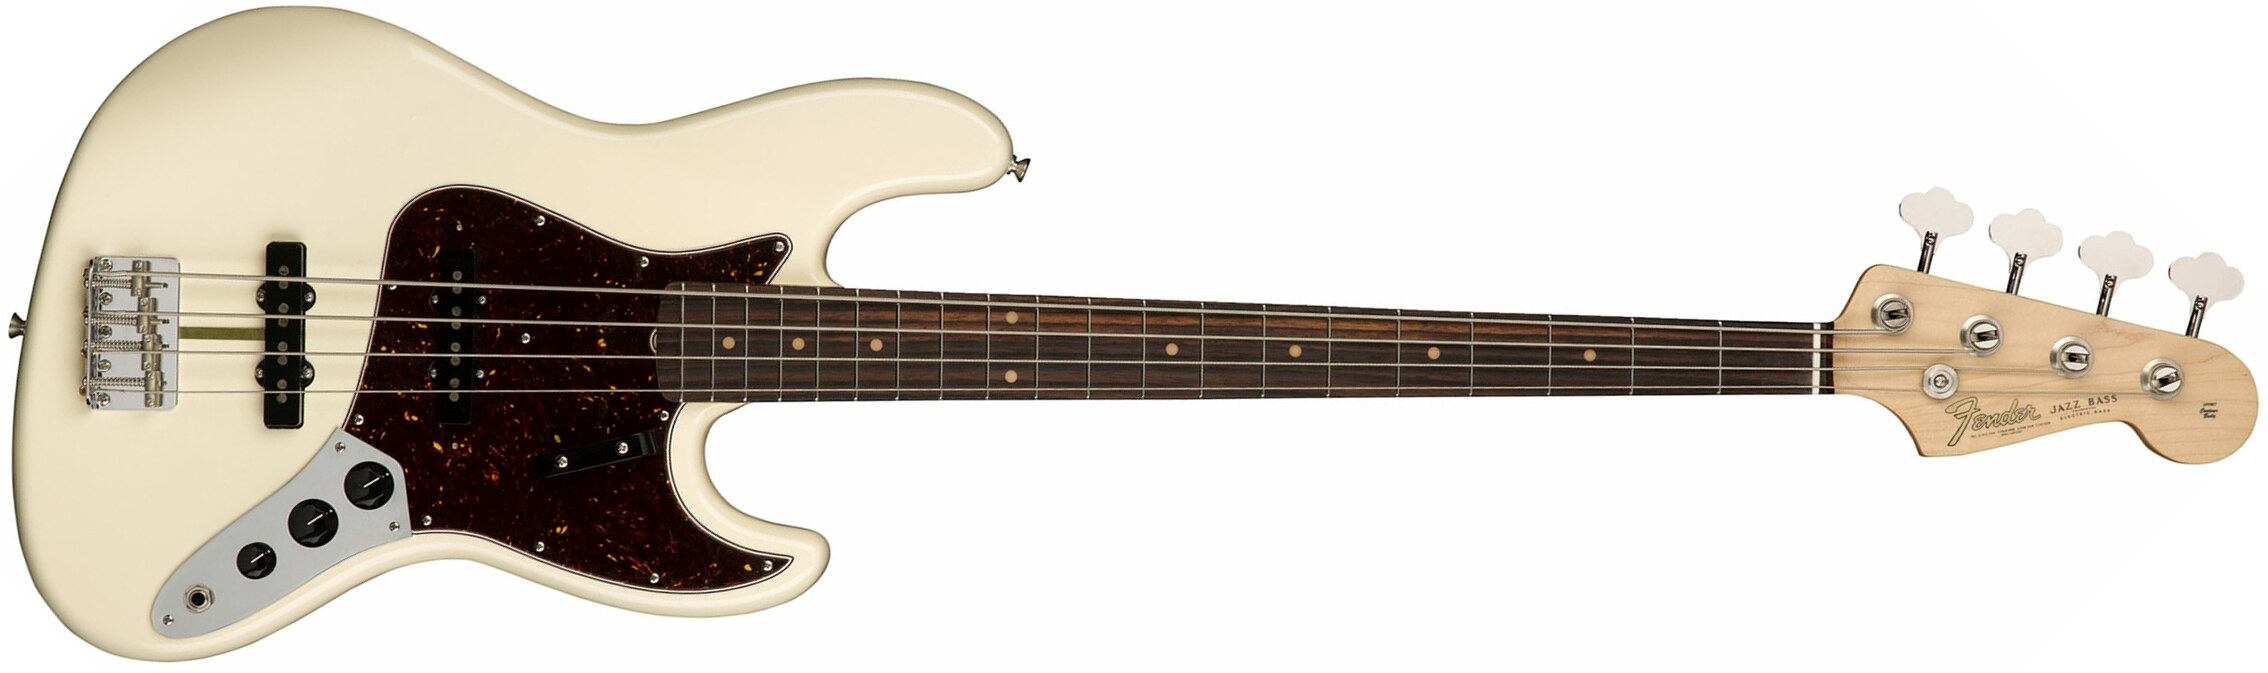 Fender Jazz Bass '60s American Original Usa Rw - Olympic White - Solid body elektrische bas - Main picture